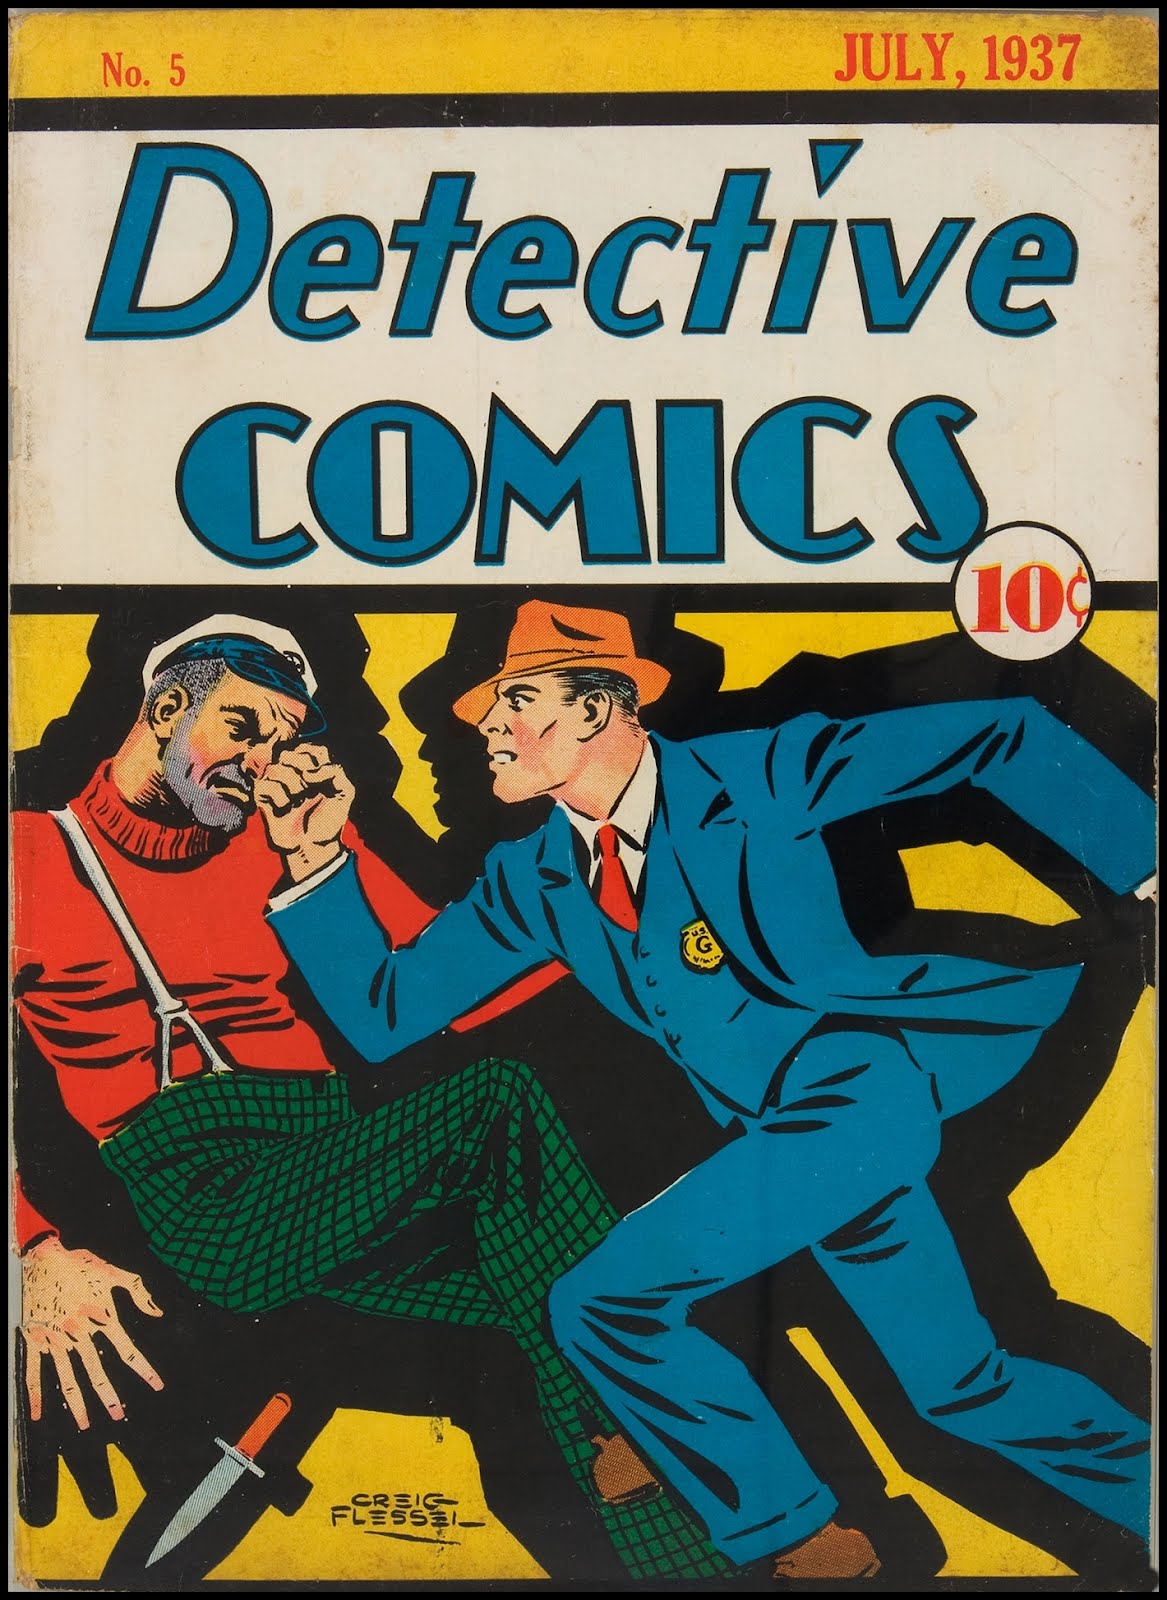 Amazing Detective Comics Pictures & Backgrounds